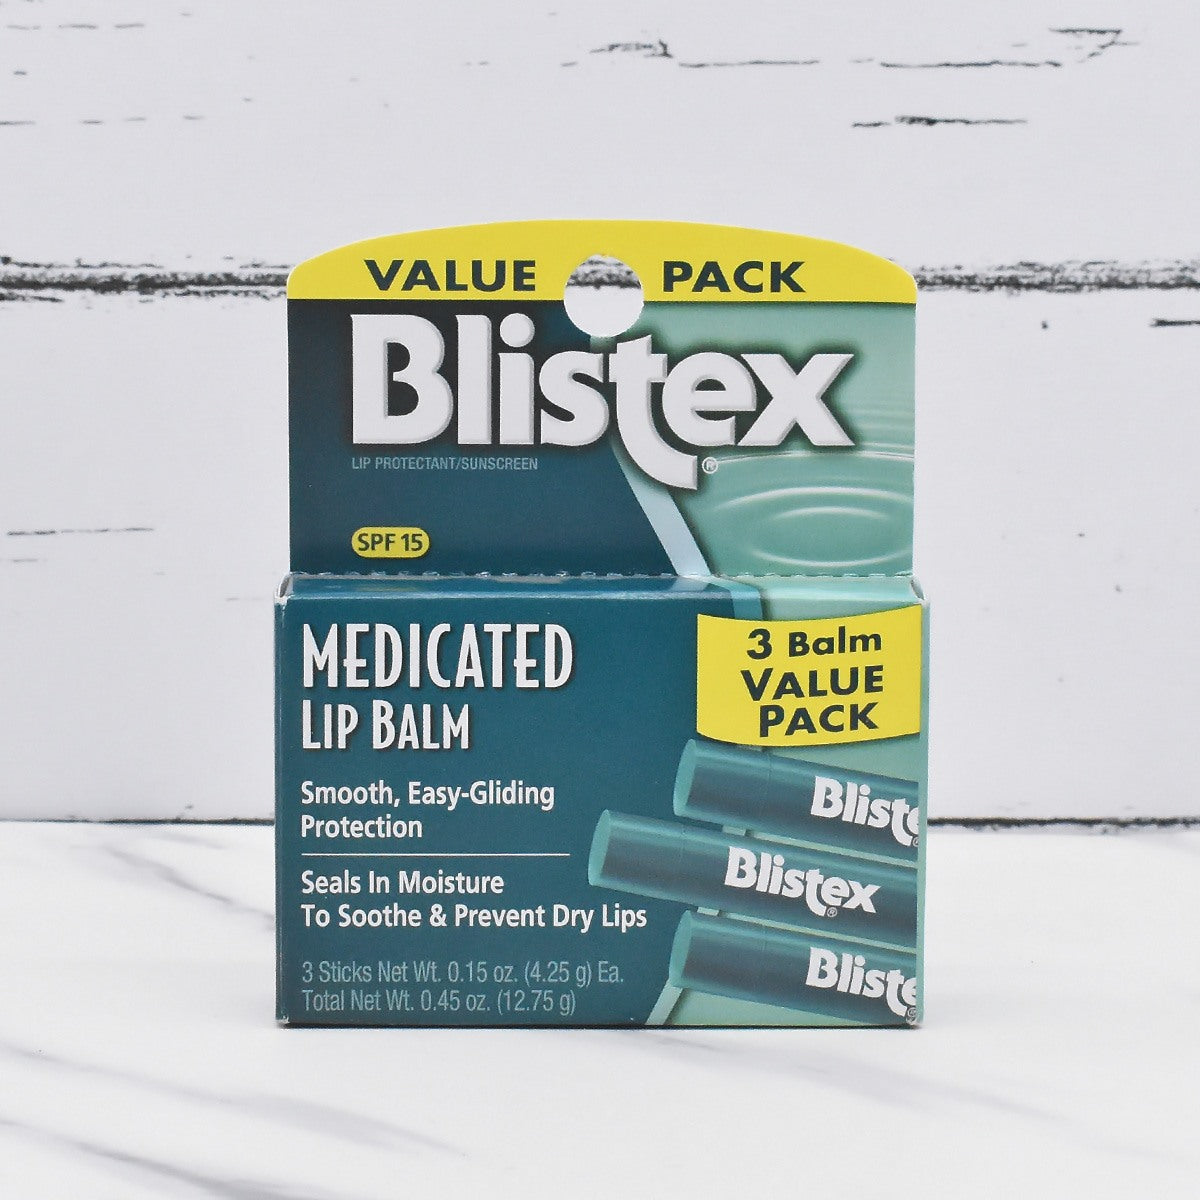 Blistex Medicated Lip Balm (Pack of 3) - 12.75g (4.25gx6)